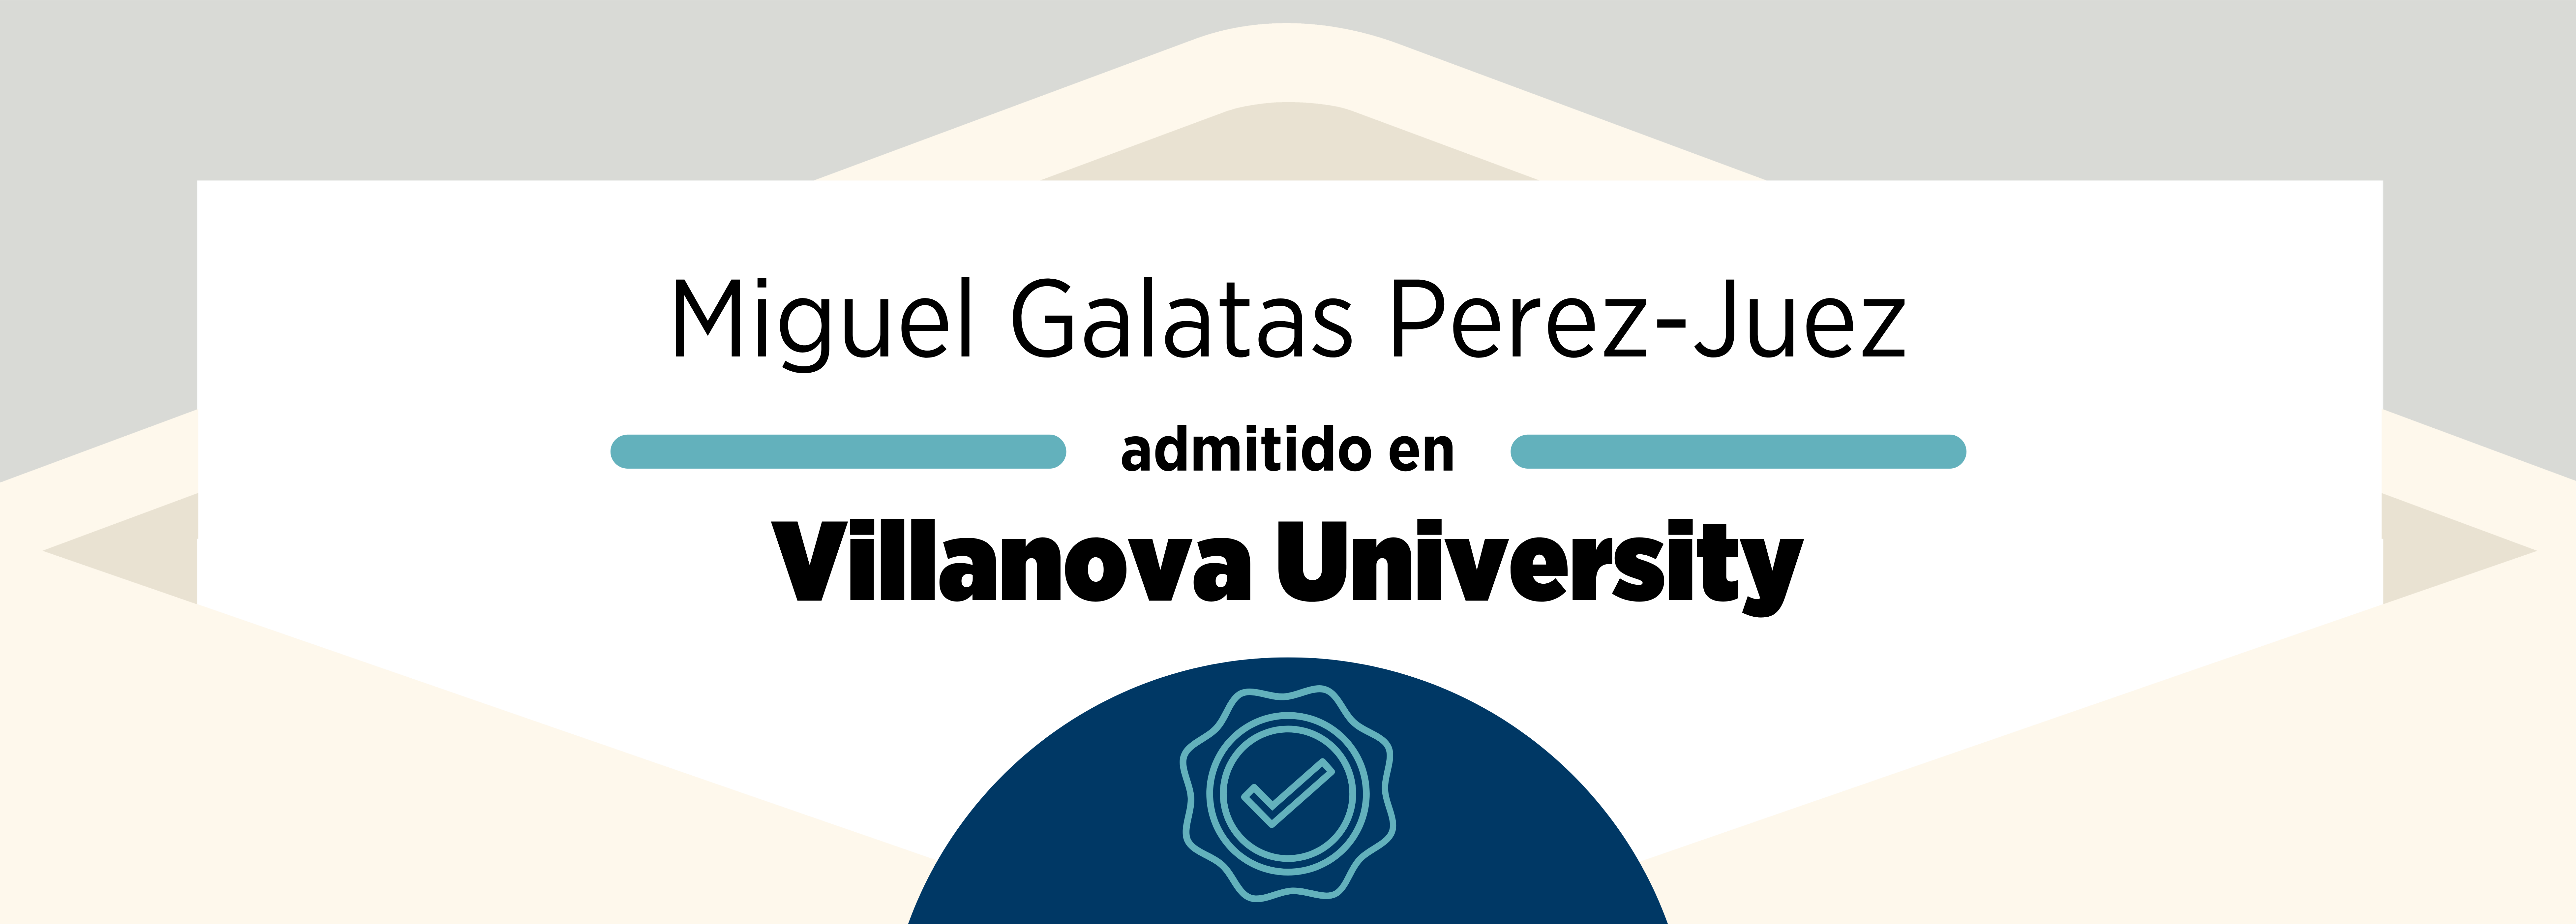 Admissions 2019: Miguel Galatas Perez-Juez & Villanova University